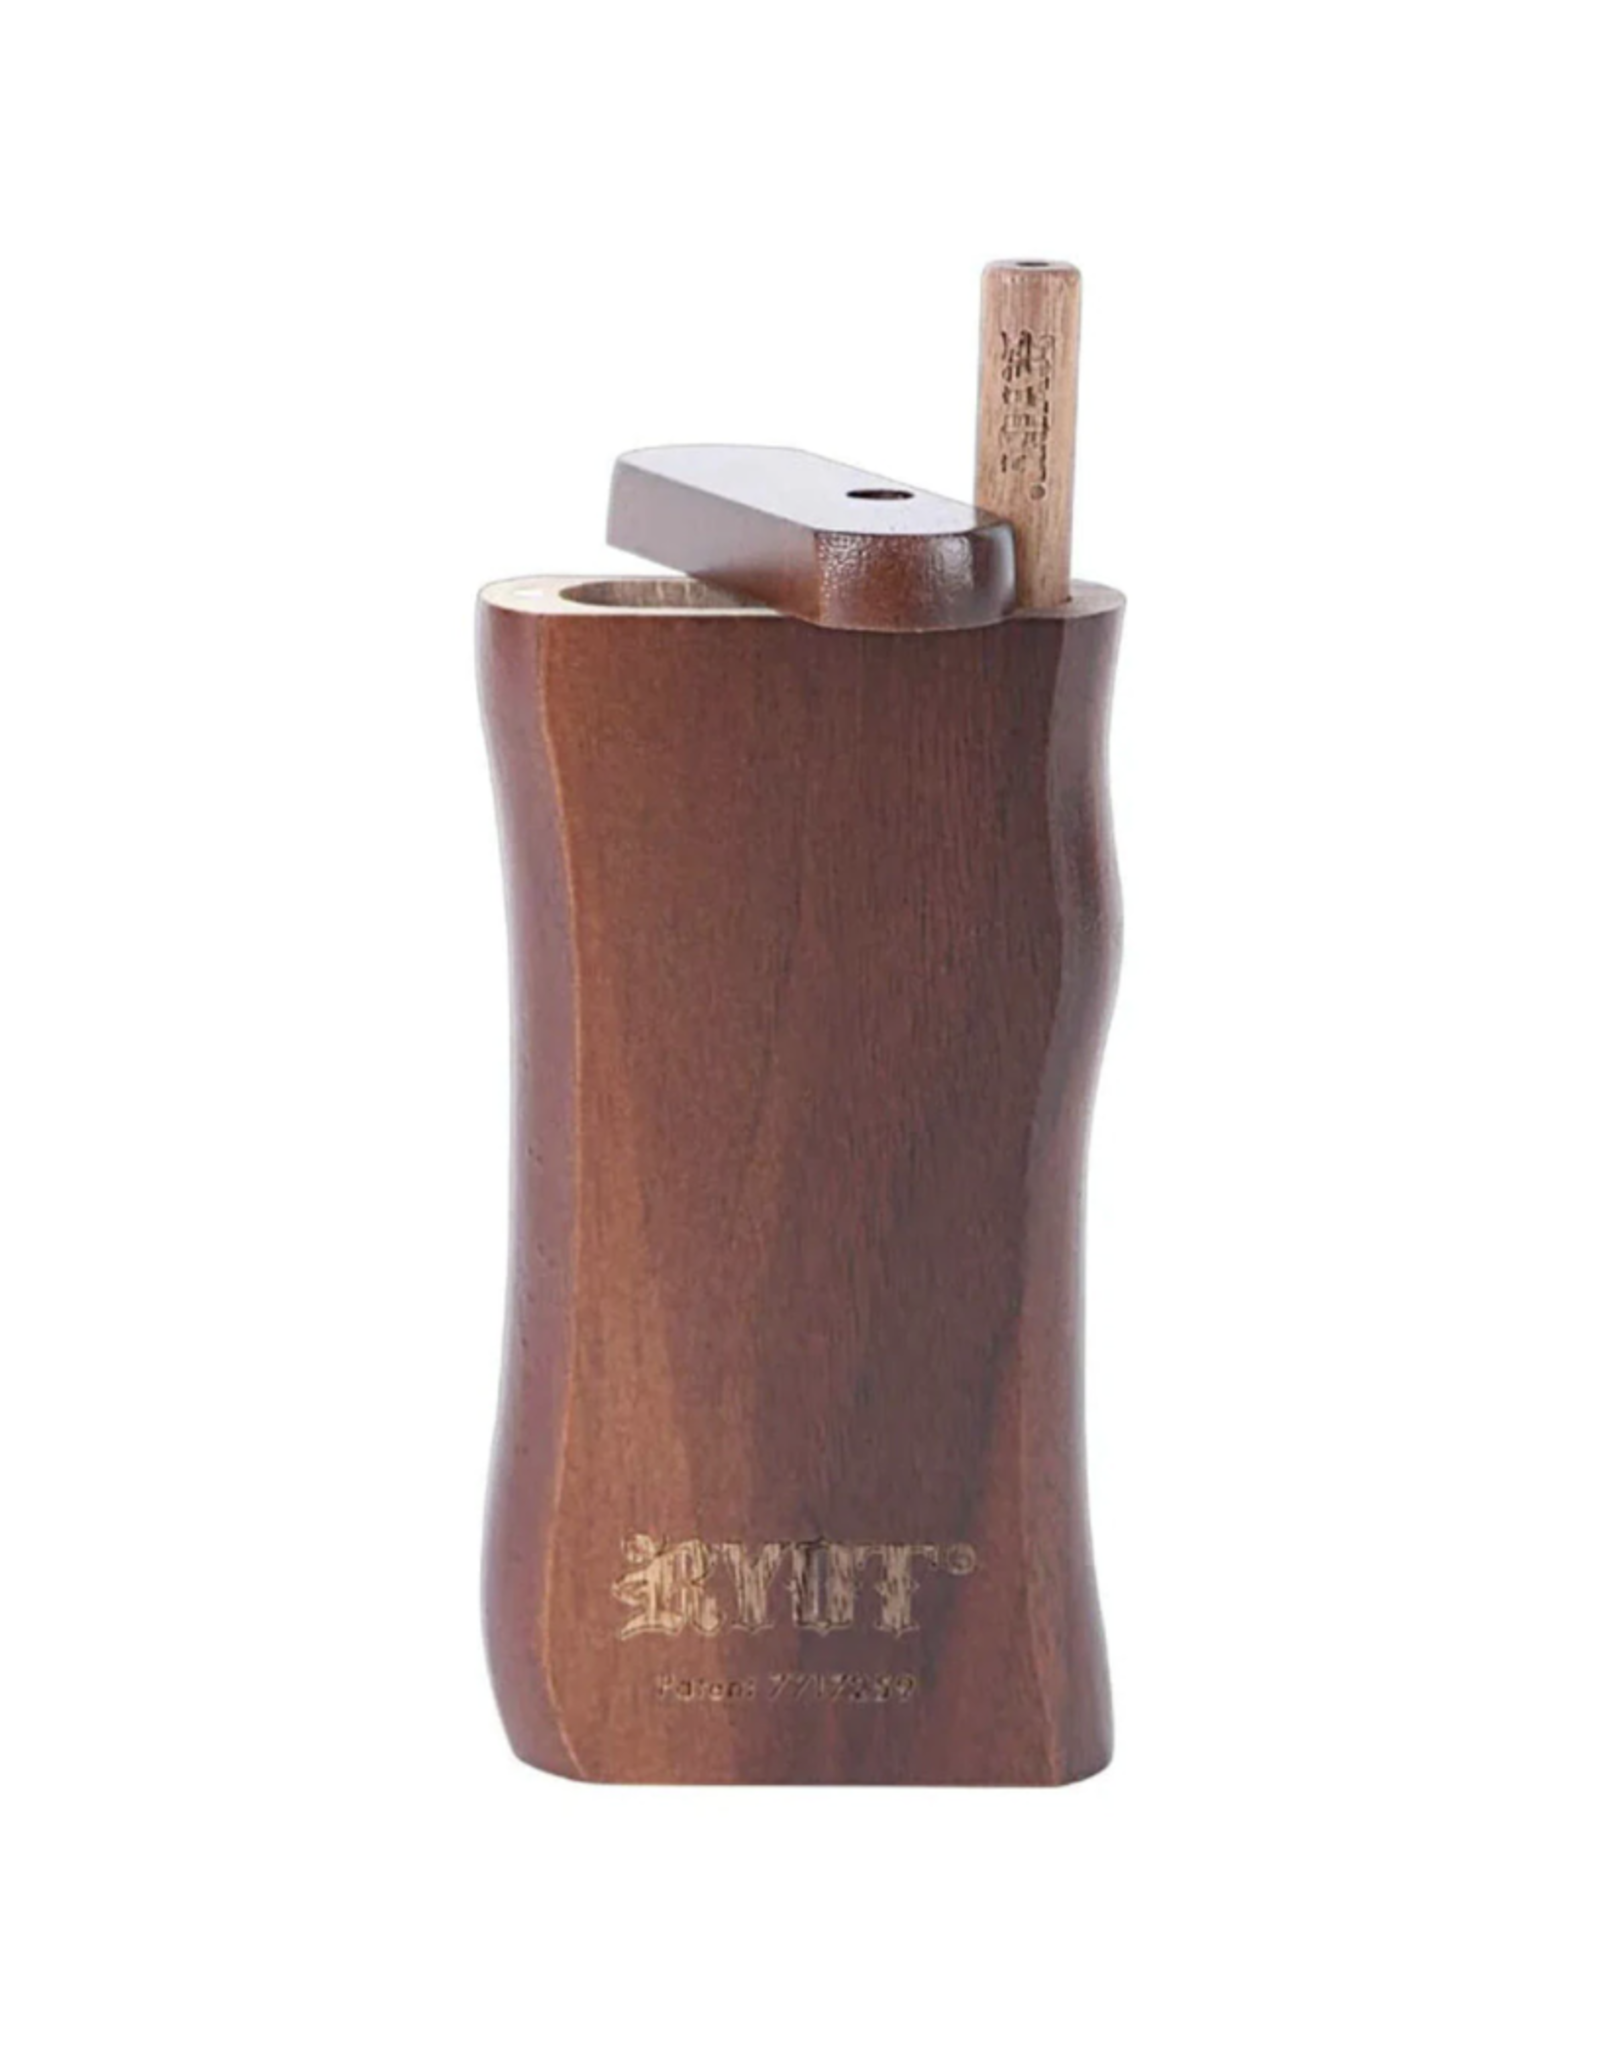 Ryot RYOT Magnetic Wood Poker Box w/ Matching Bat